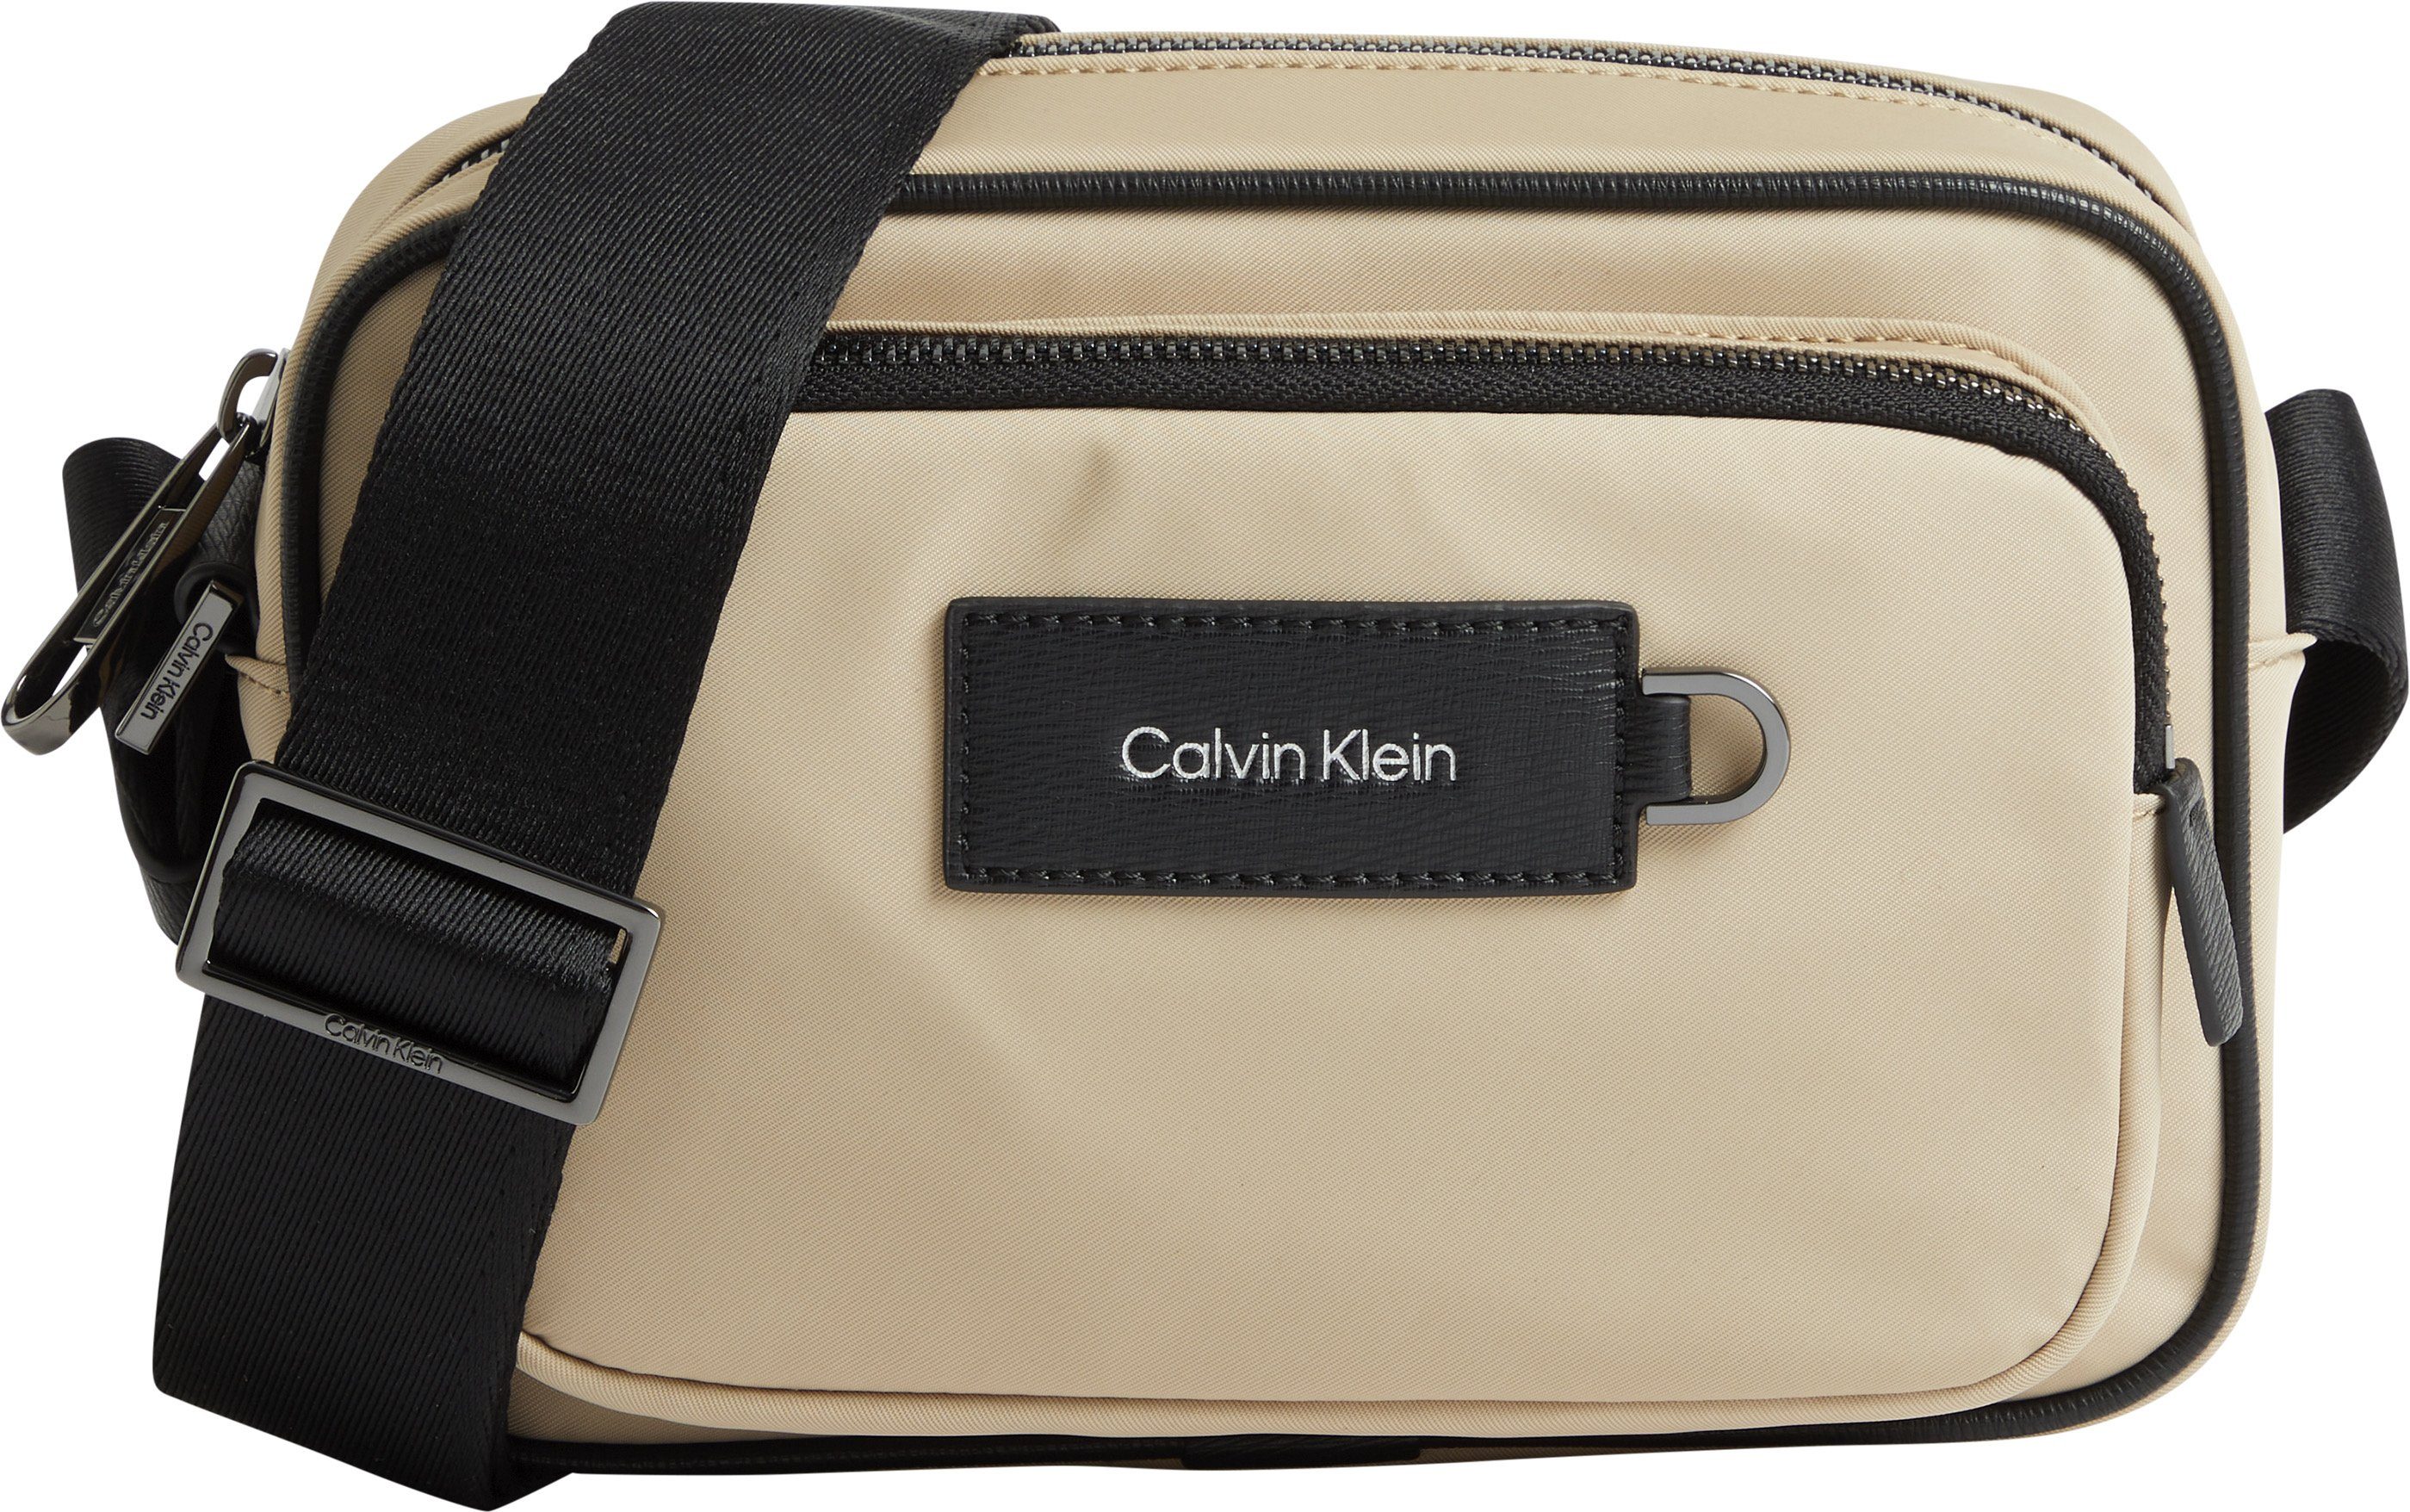 CAMERA gepolsterter Klein mit ELEVATED CK Bag BAG, Calvin Rückseite Mini